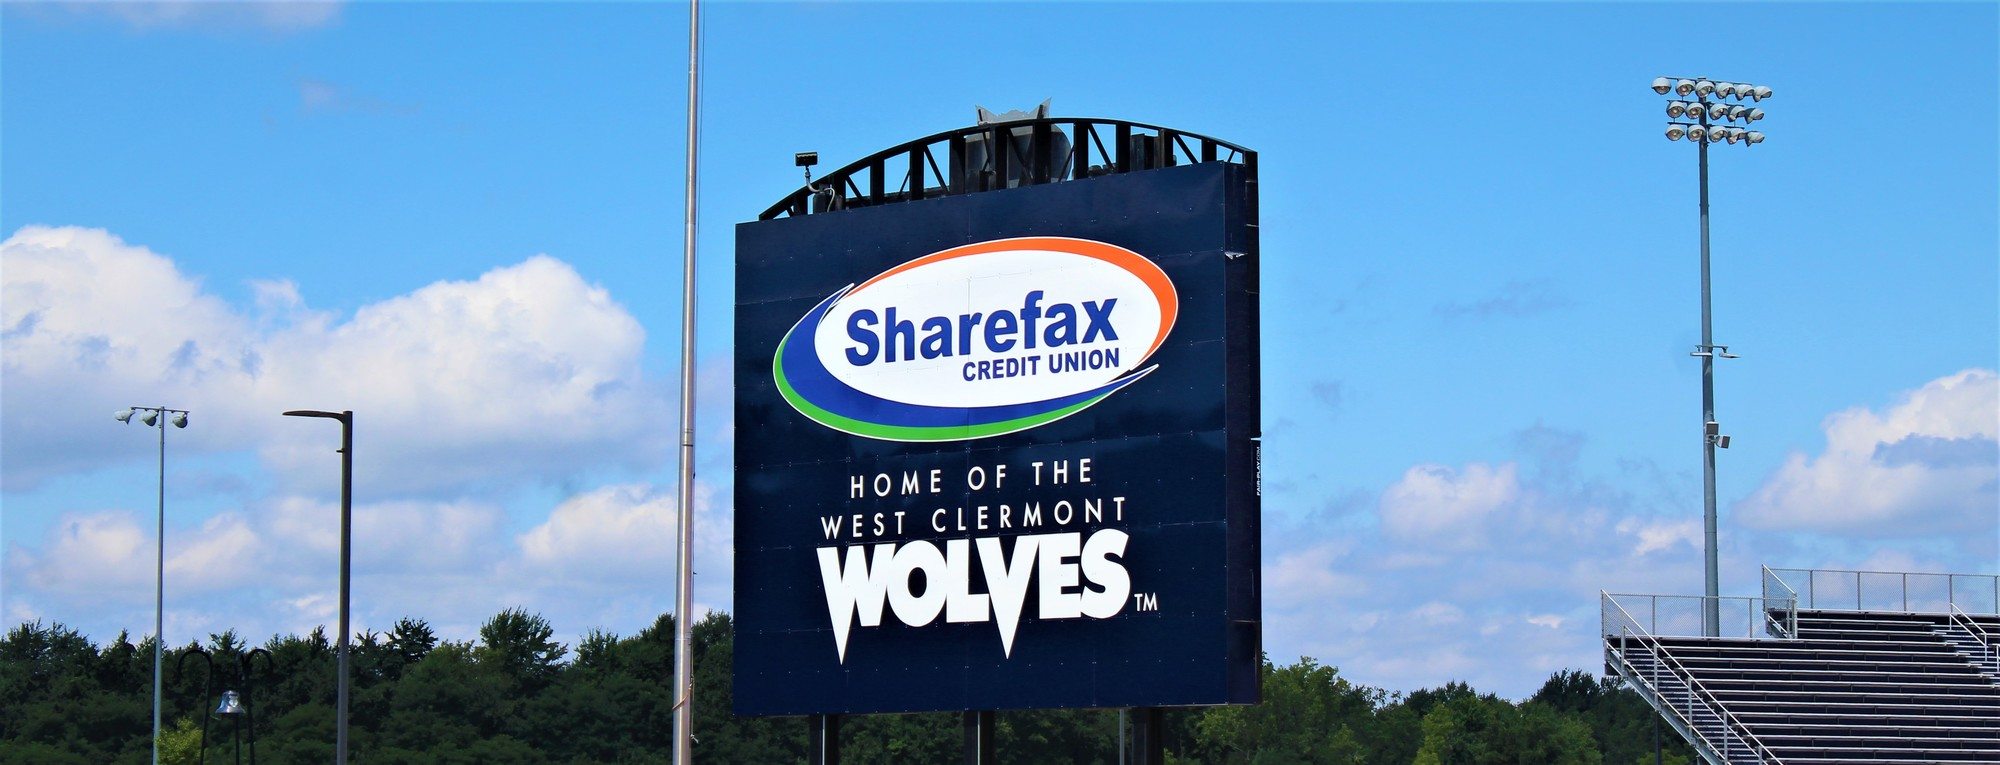 sharefax stadium sign